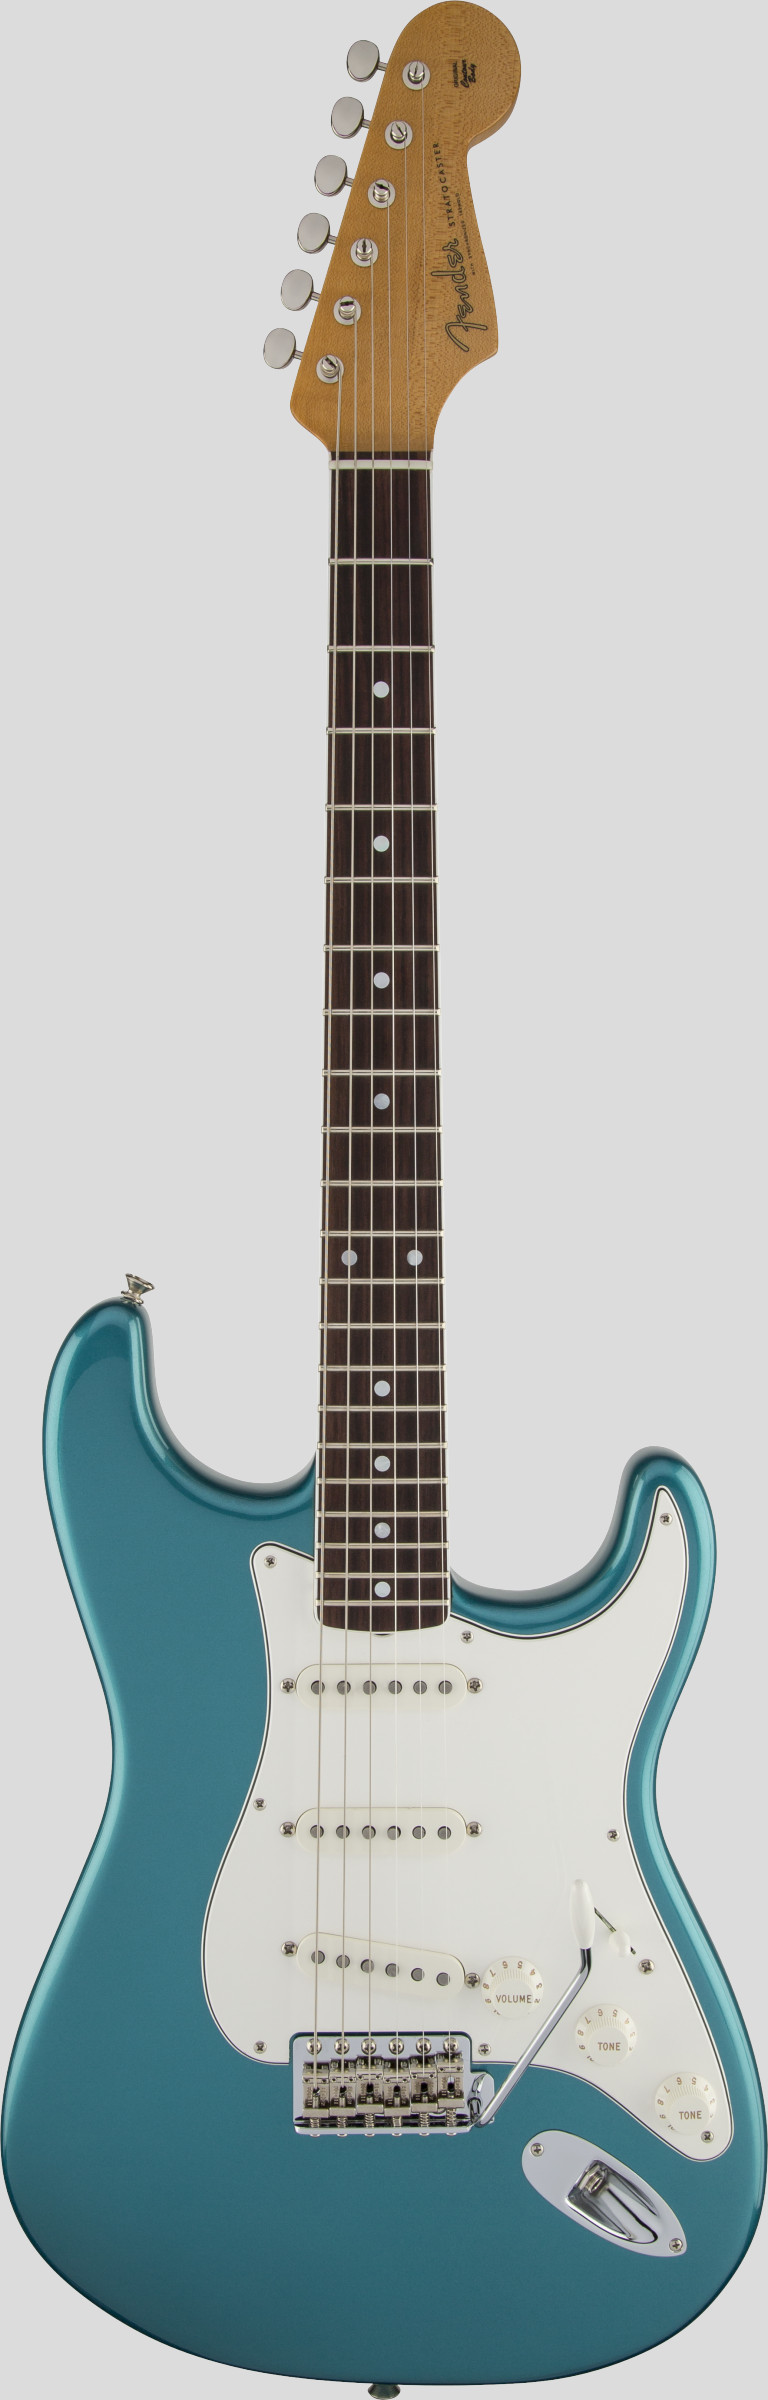 Fender Eric Johnson Stratocaster Lucerne Aqua Firemist 1